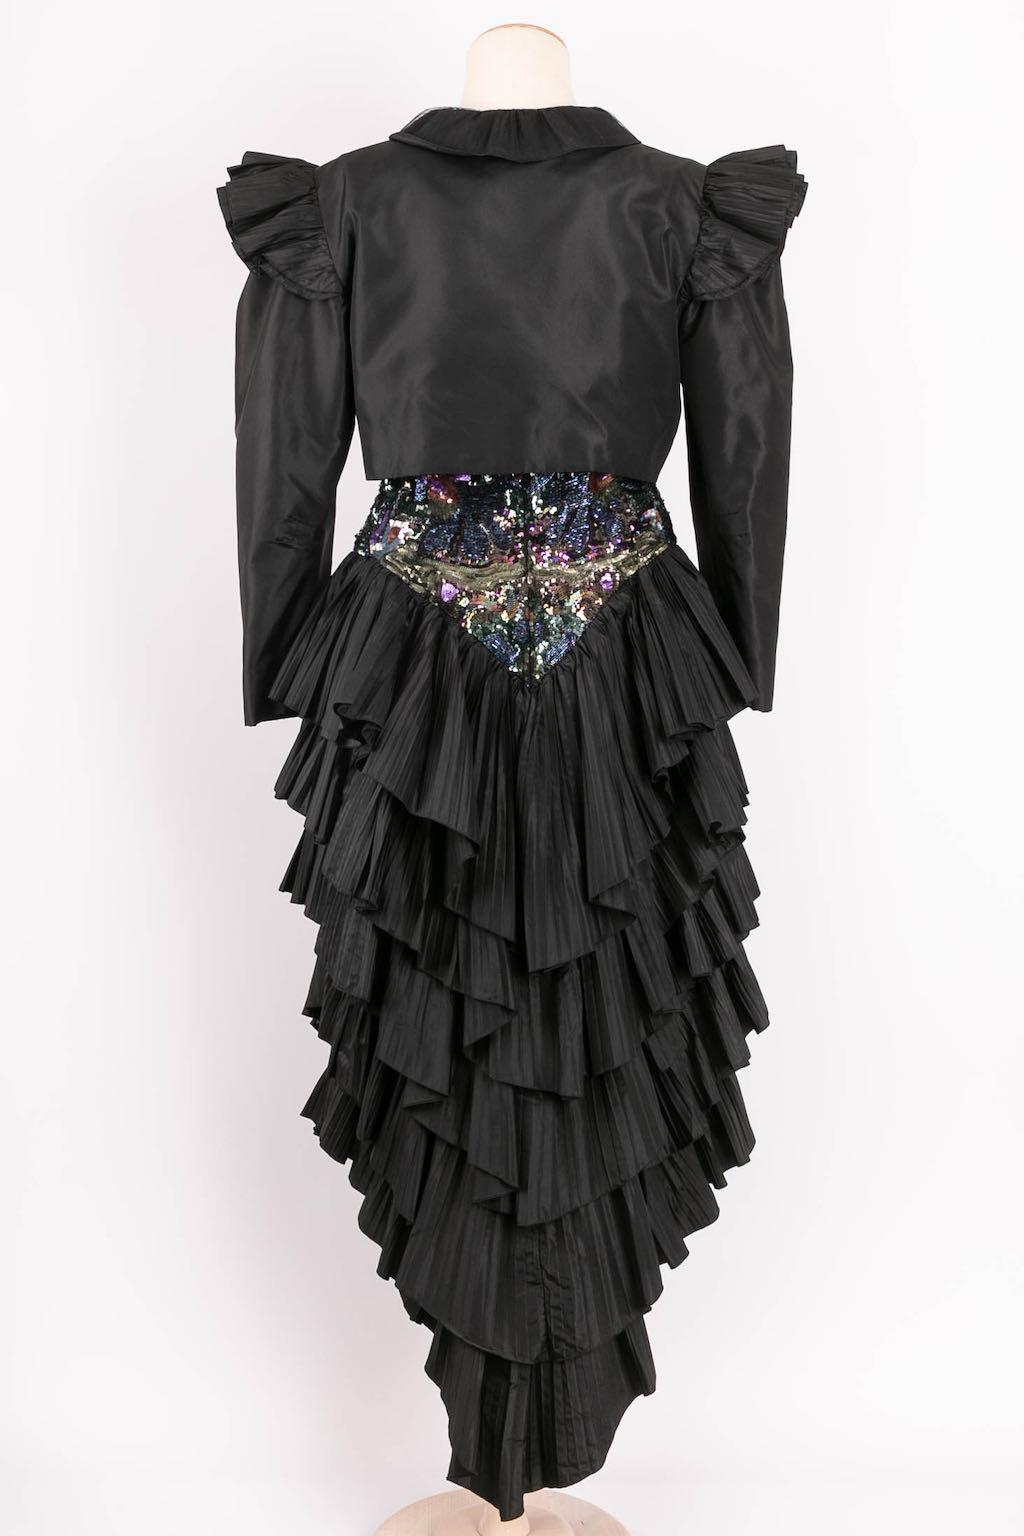 Loris Azzaro Asymmetrical Bustier Dress and its Bolero For Sale 5